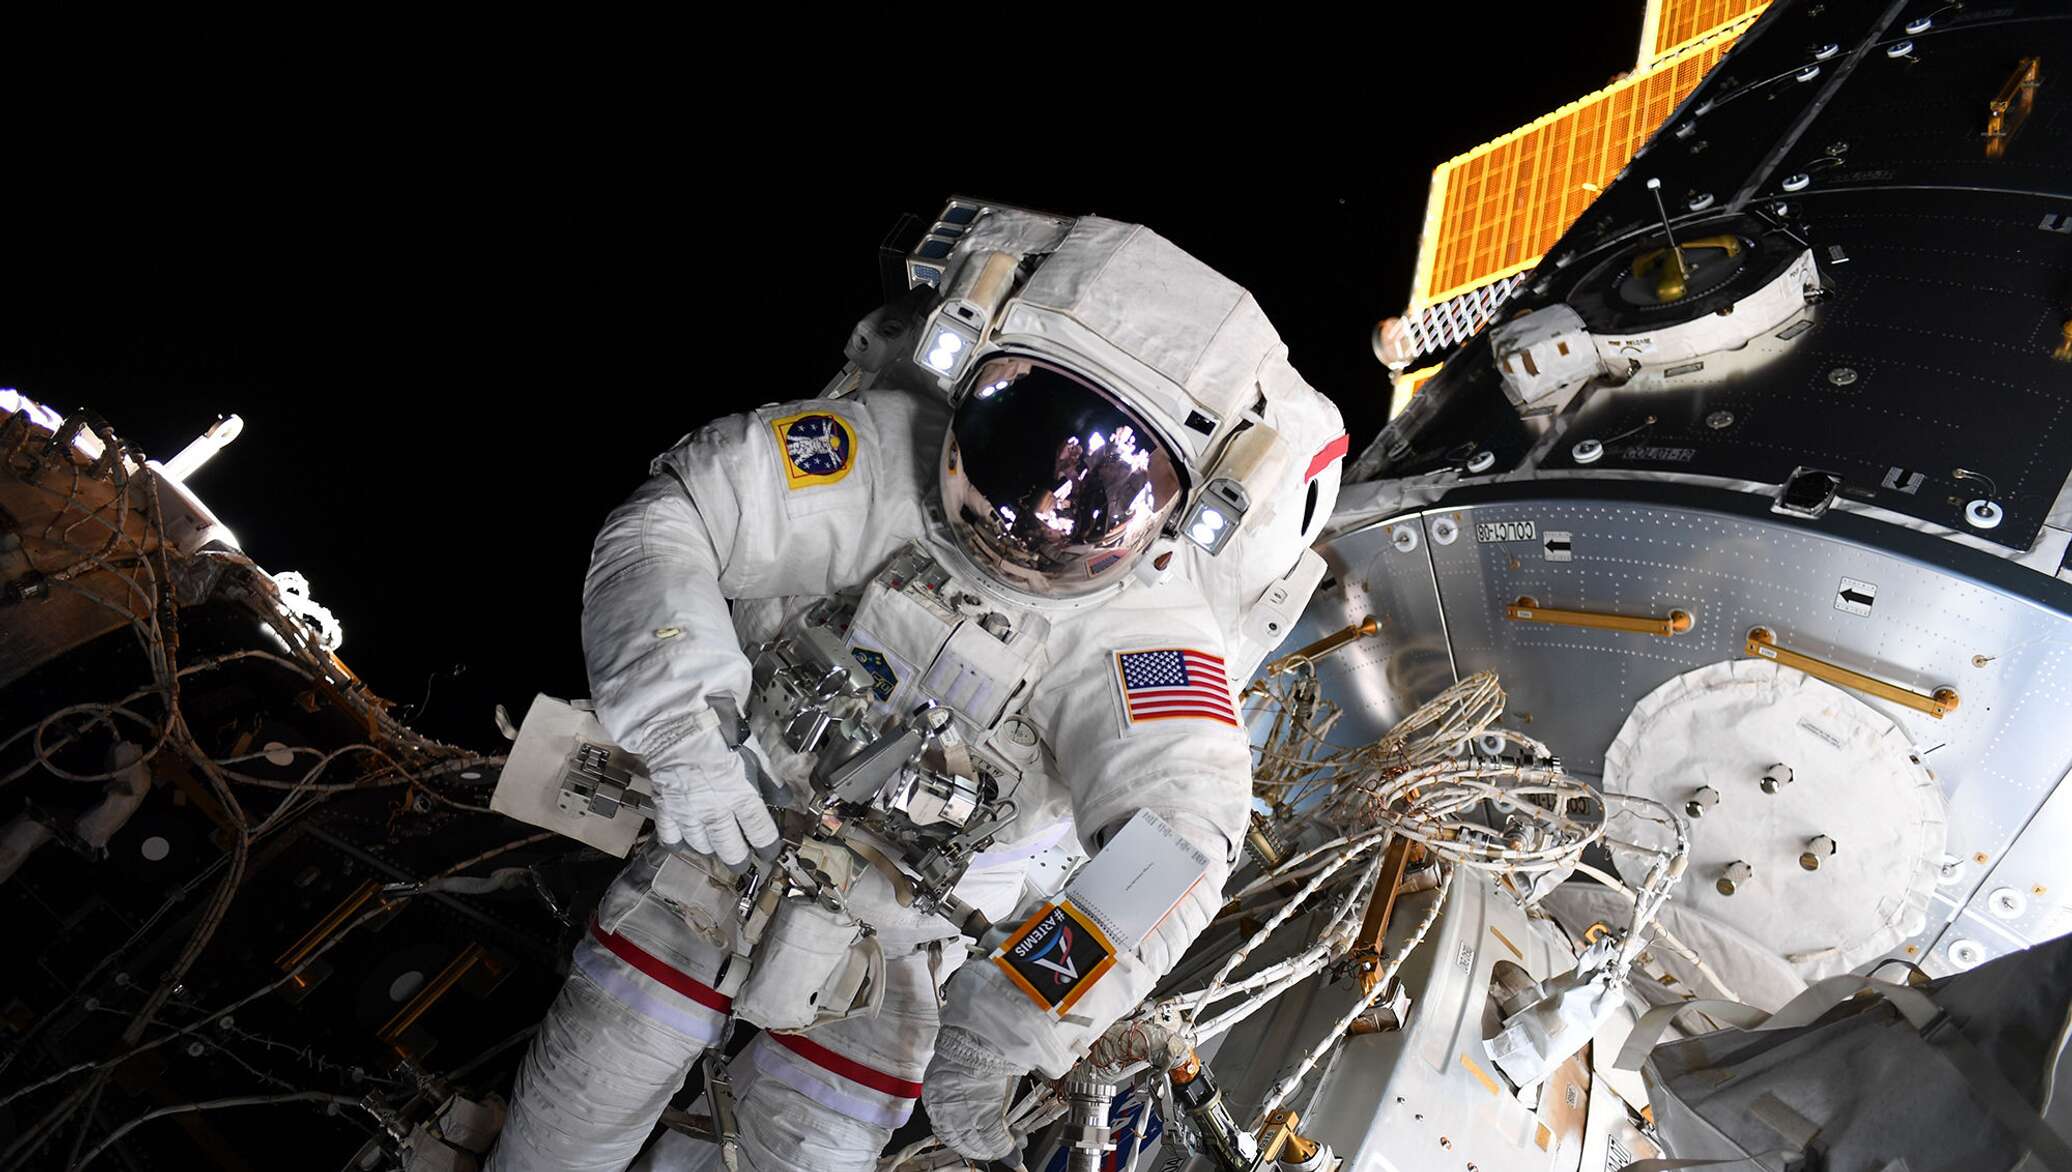 3 life space. Скафандры НАСА на МКС. Космонавт НАСА В открытом космосе. Скафандр МКС США. Астронавты НАСА В космосе.